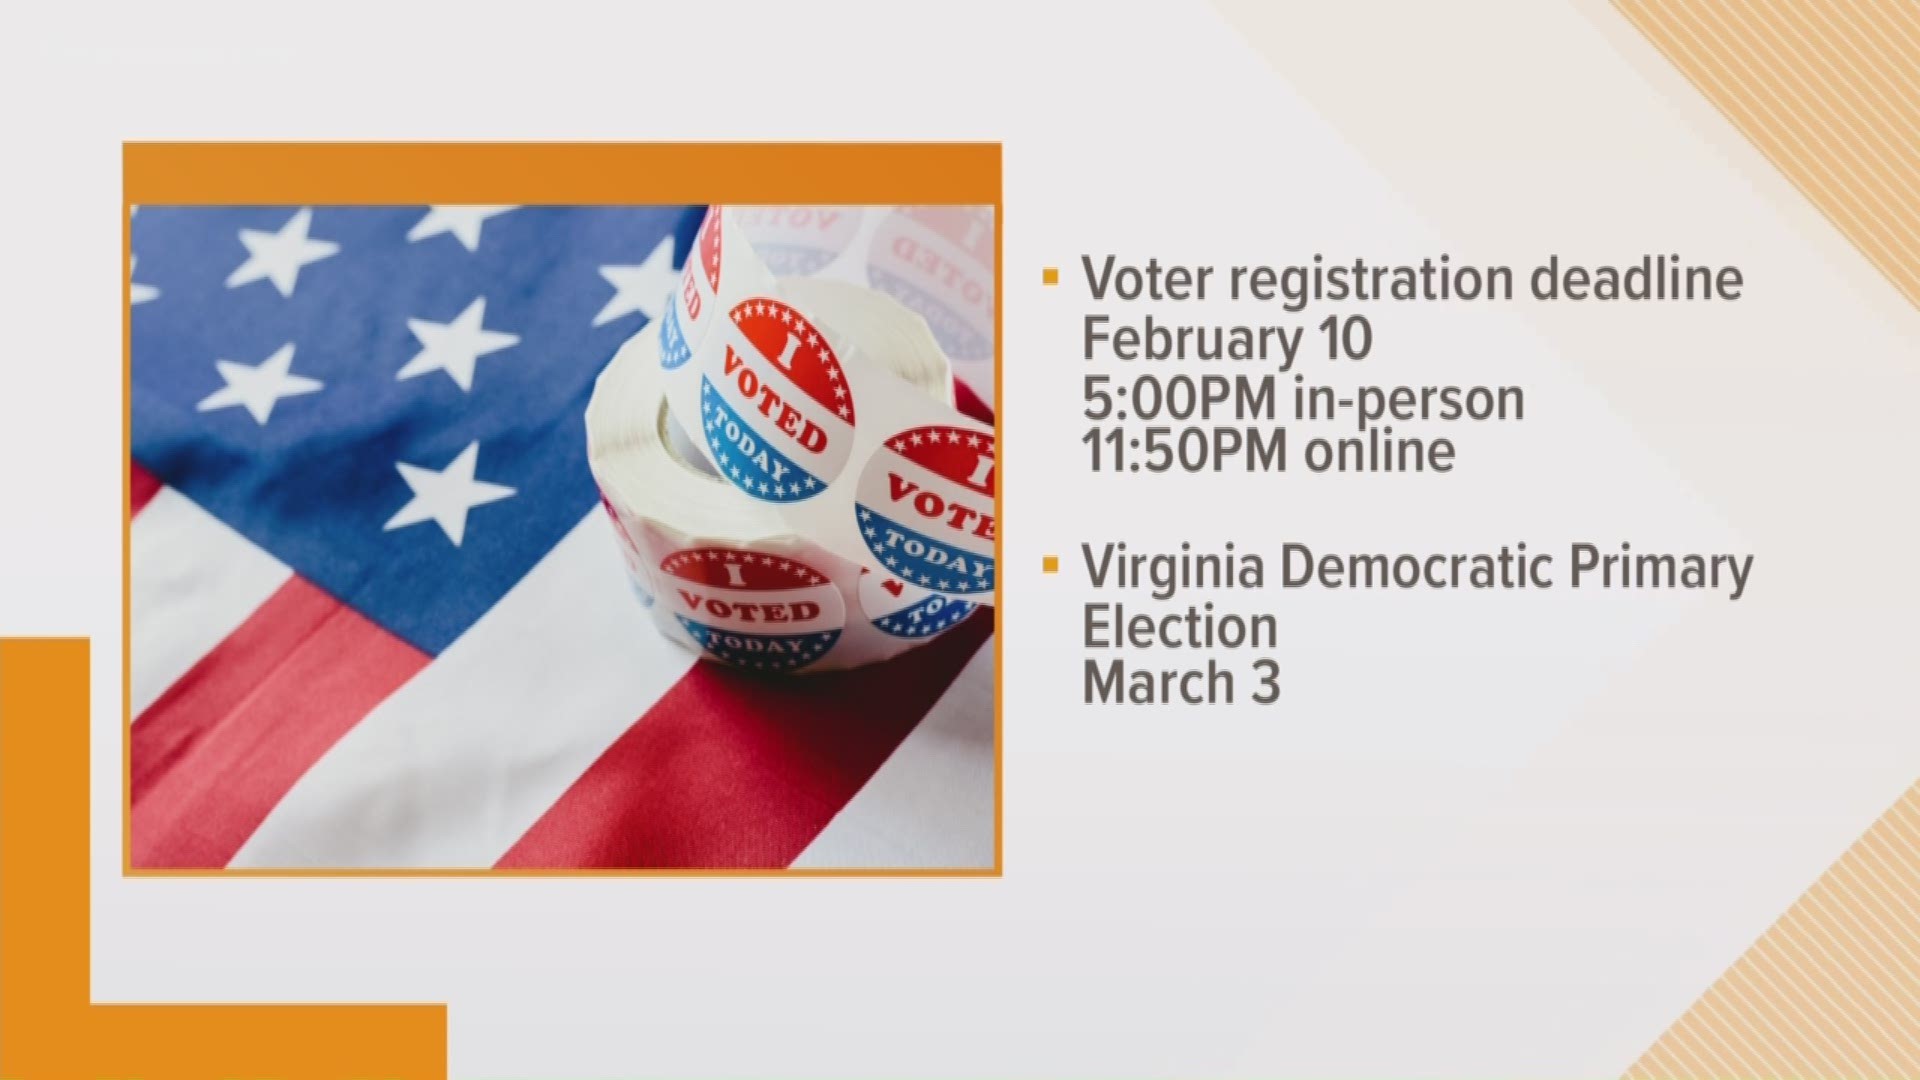 Virginia Democratic Presidential Primary deadline is February 10